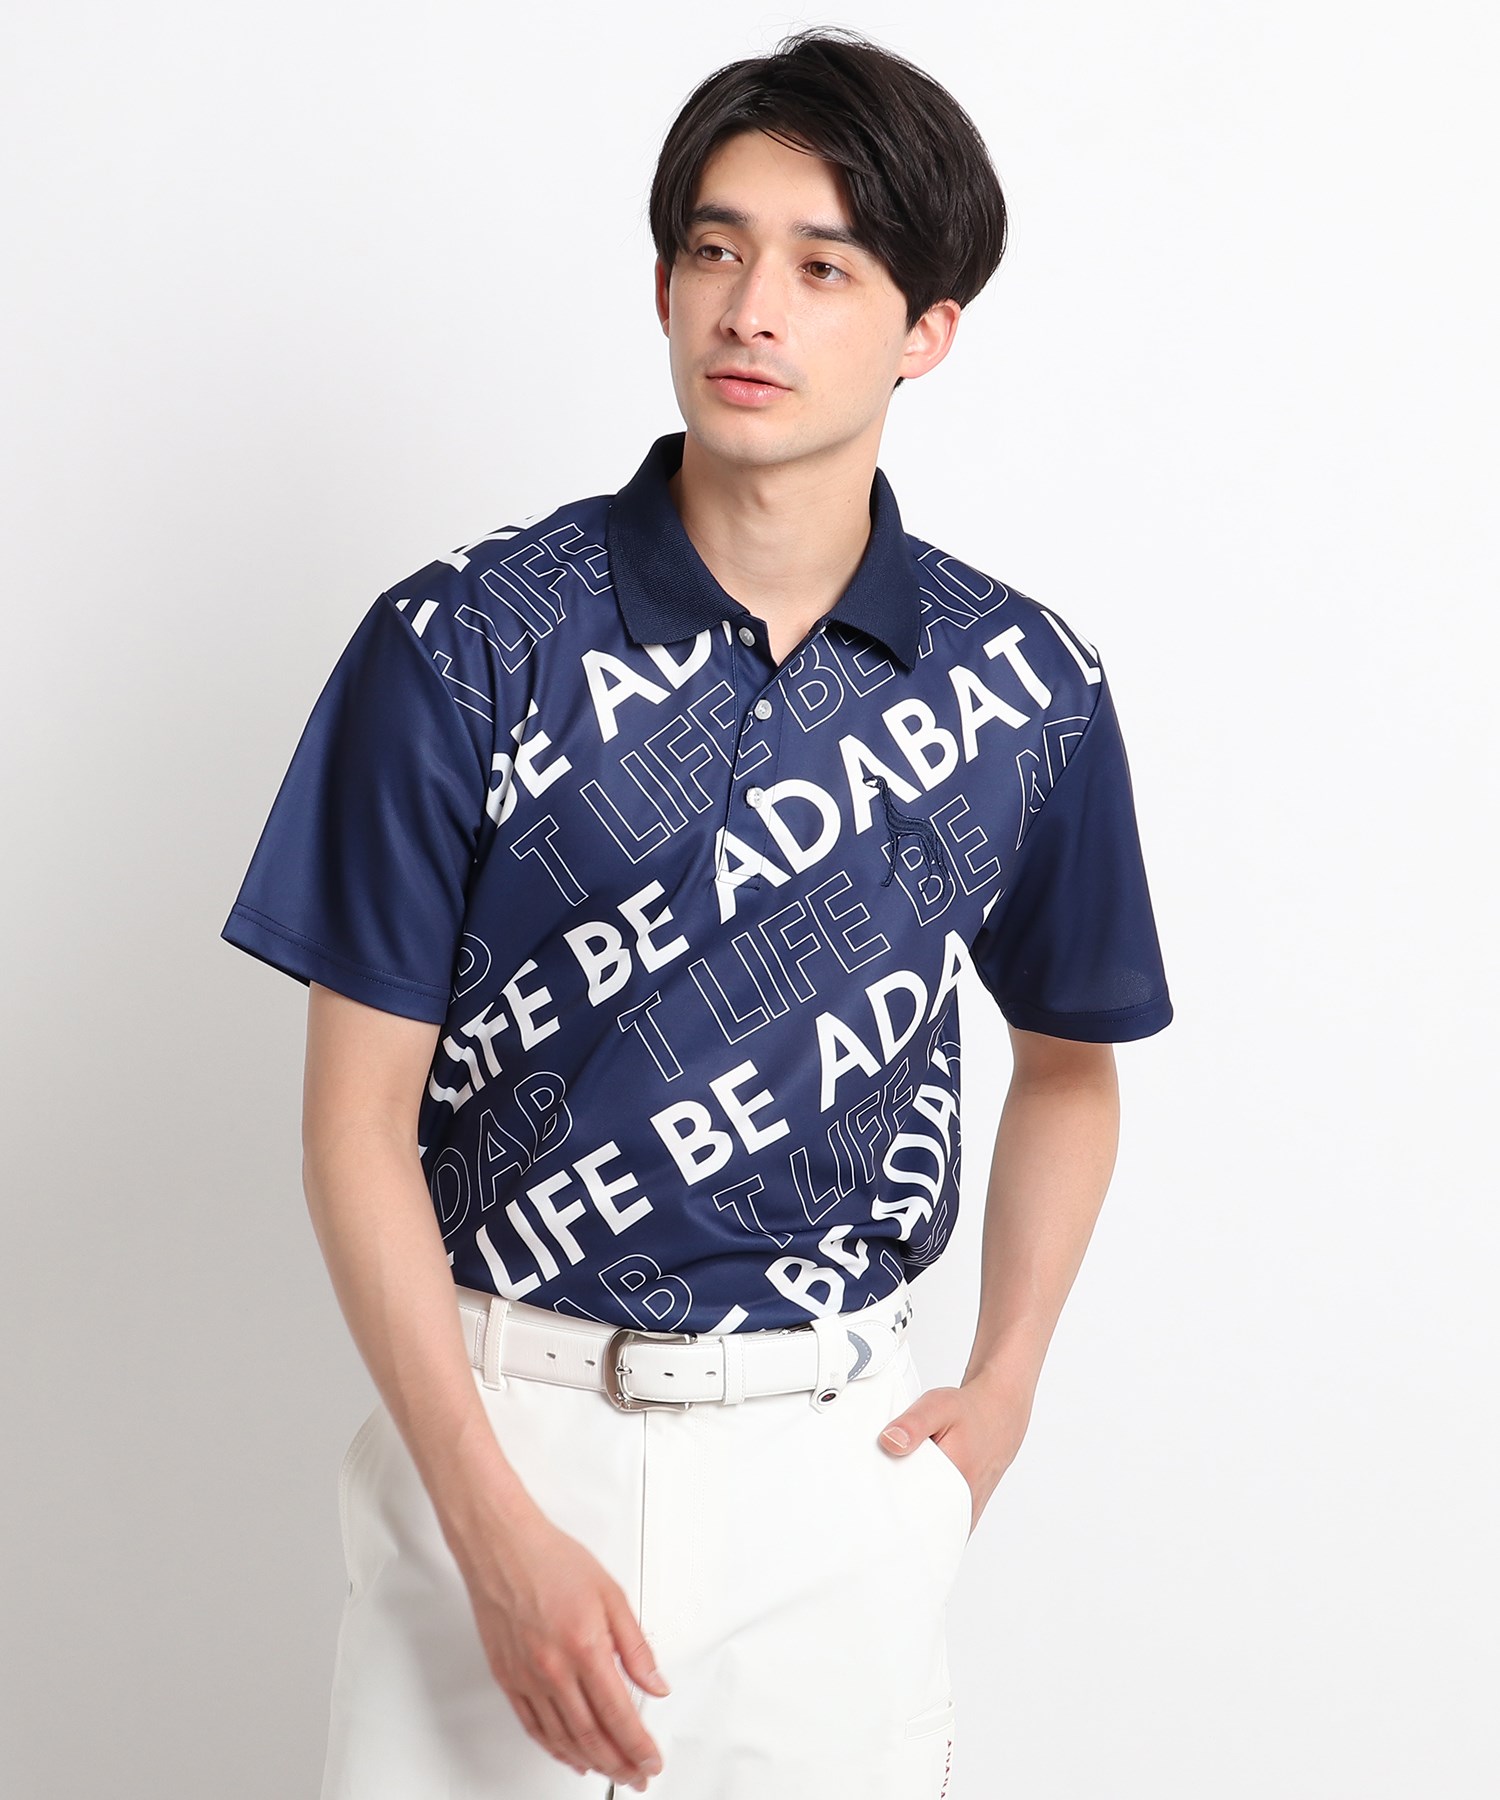 adabat 信用 ビッグロゴ 最大43%OFFクーポン バイアスロゴデザイン 半袖ポロシャツ